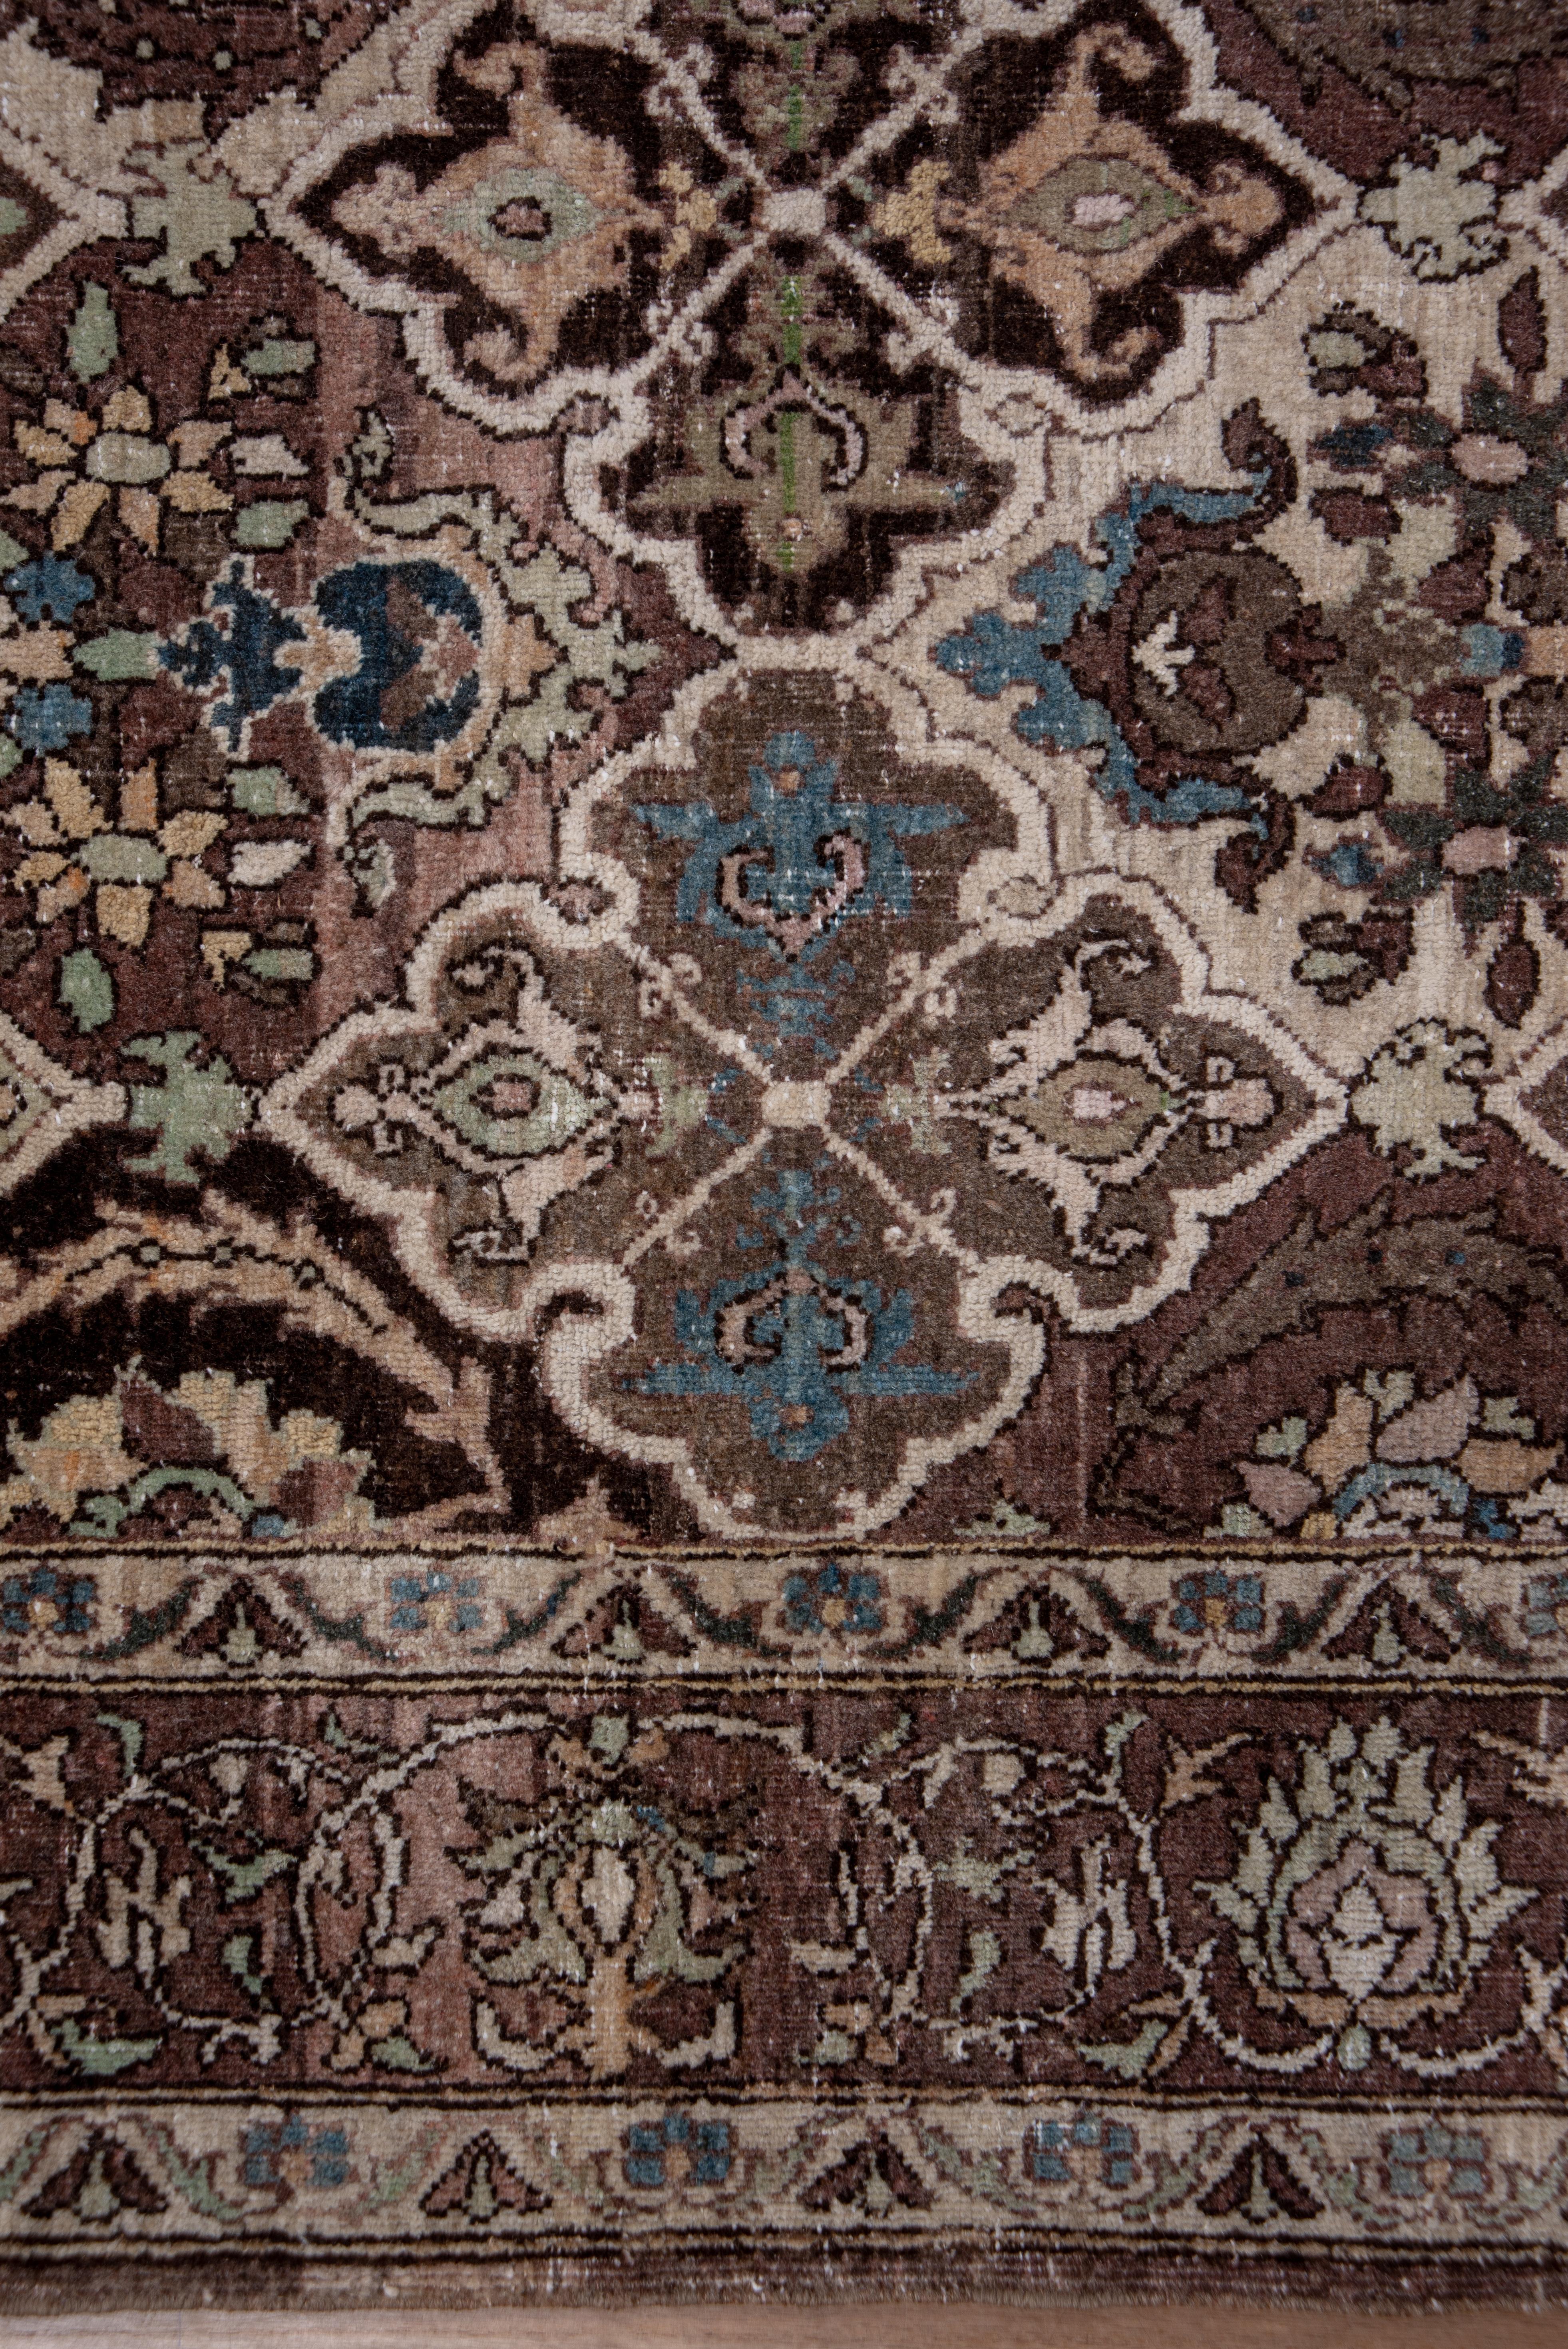 Fine Antique Persian Tabriz Kellegi Rug, Brown Palette, Seafoam & Blue Accents For Sale 1